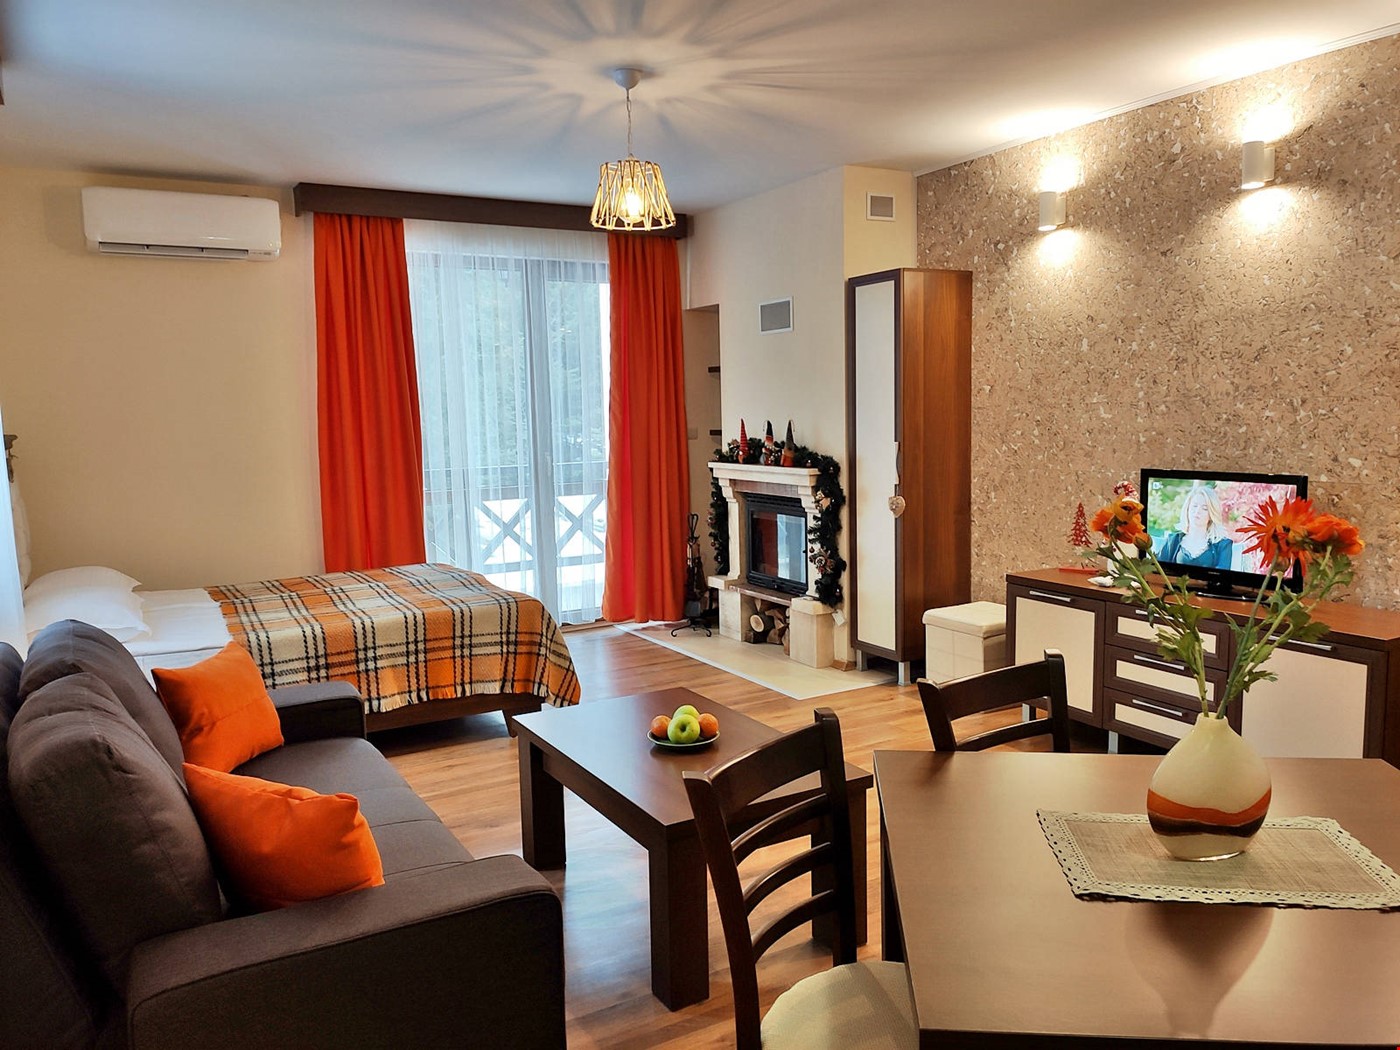 Hotel Smolianskite ezera Bulgaria nomad remote 79cc1c20-e1d5-4a8f-84d8-fcad68b5aefa_1img-20201223-135811-1600x1200.jpg